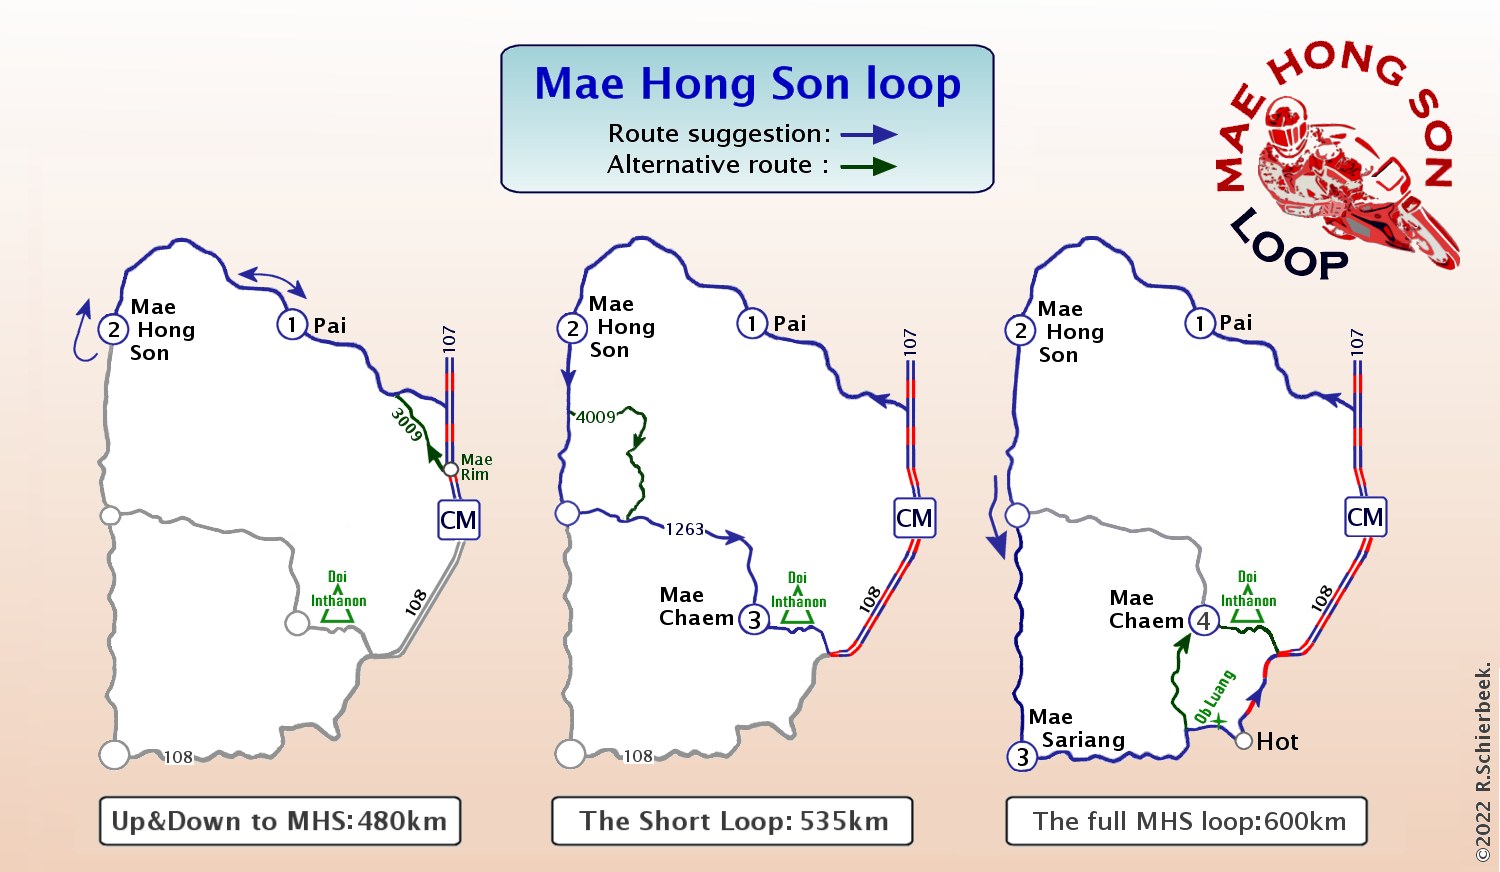 Mae Hong Son loop options